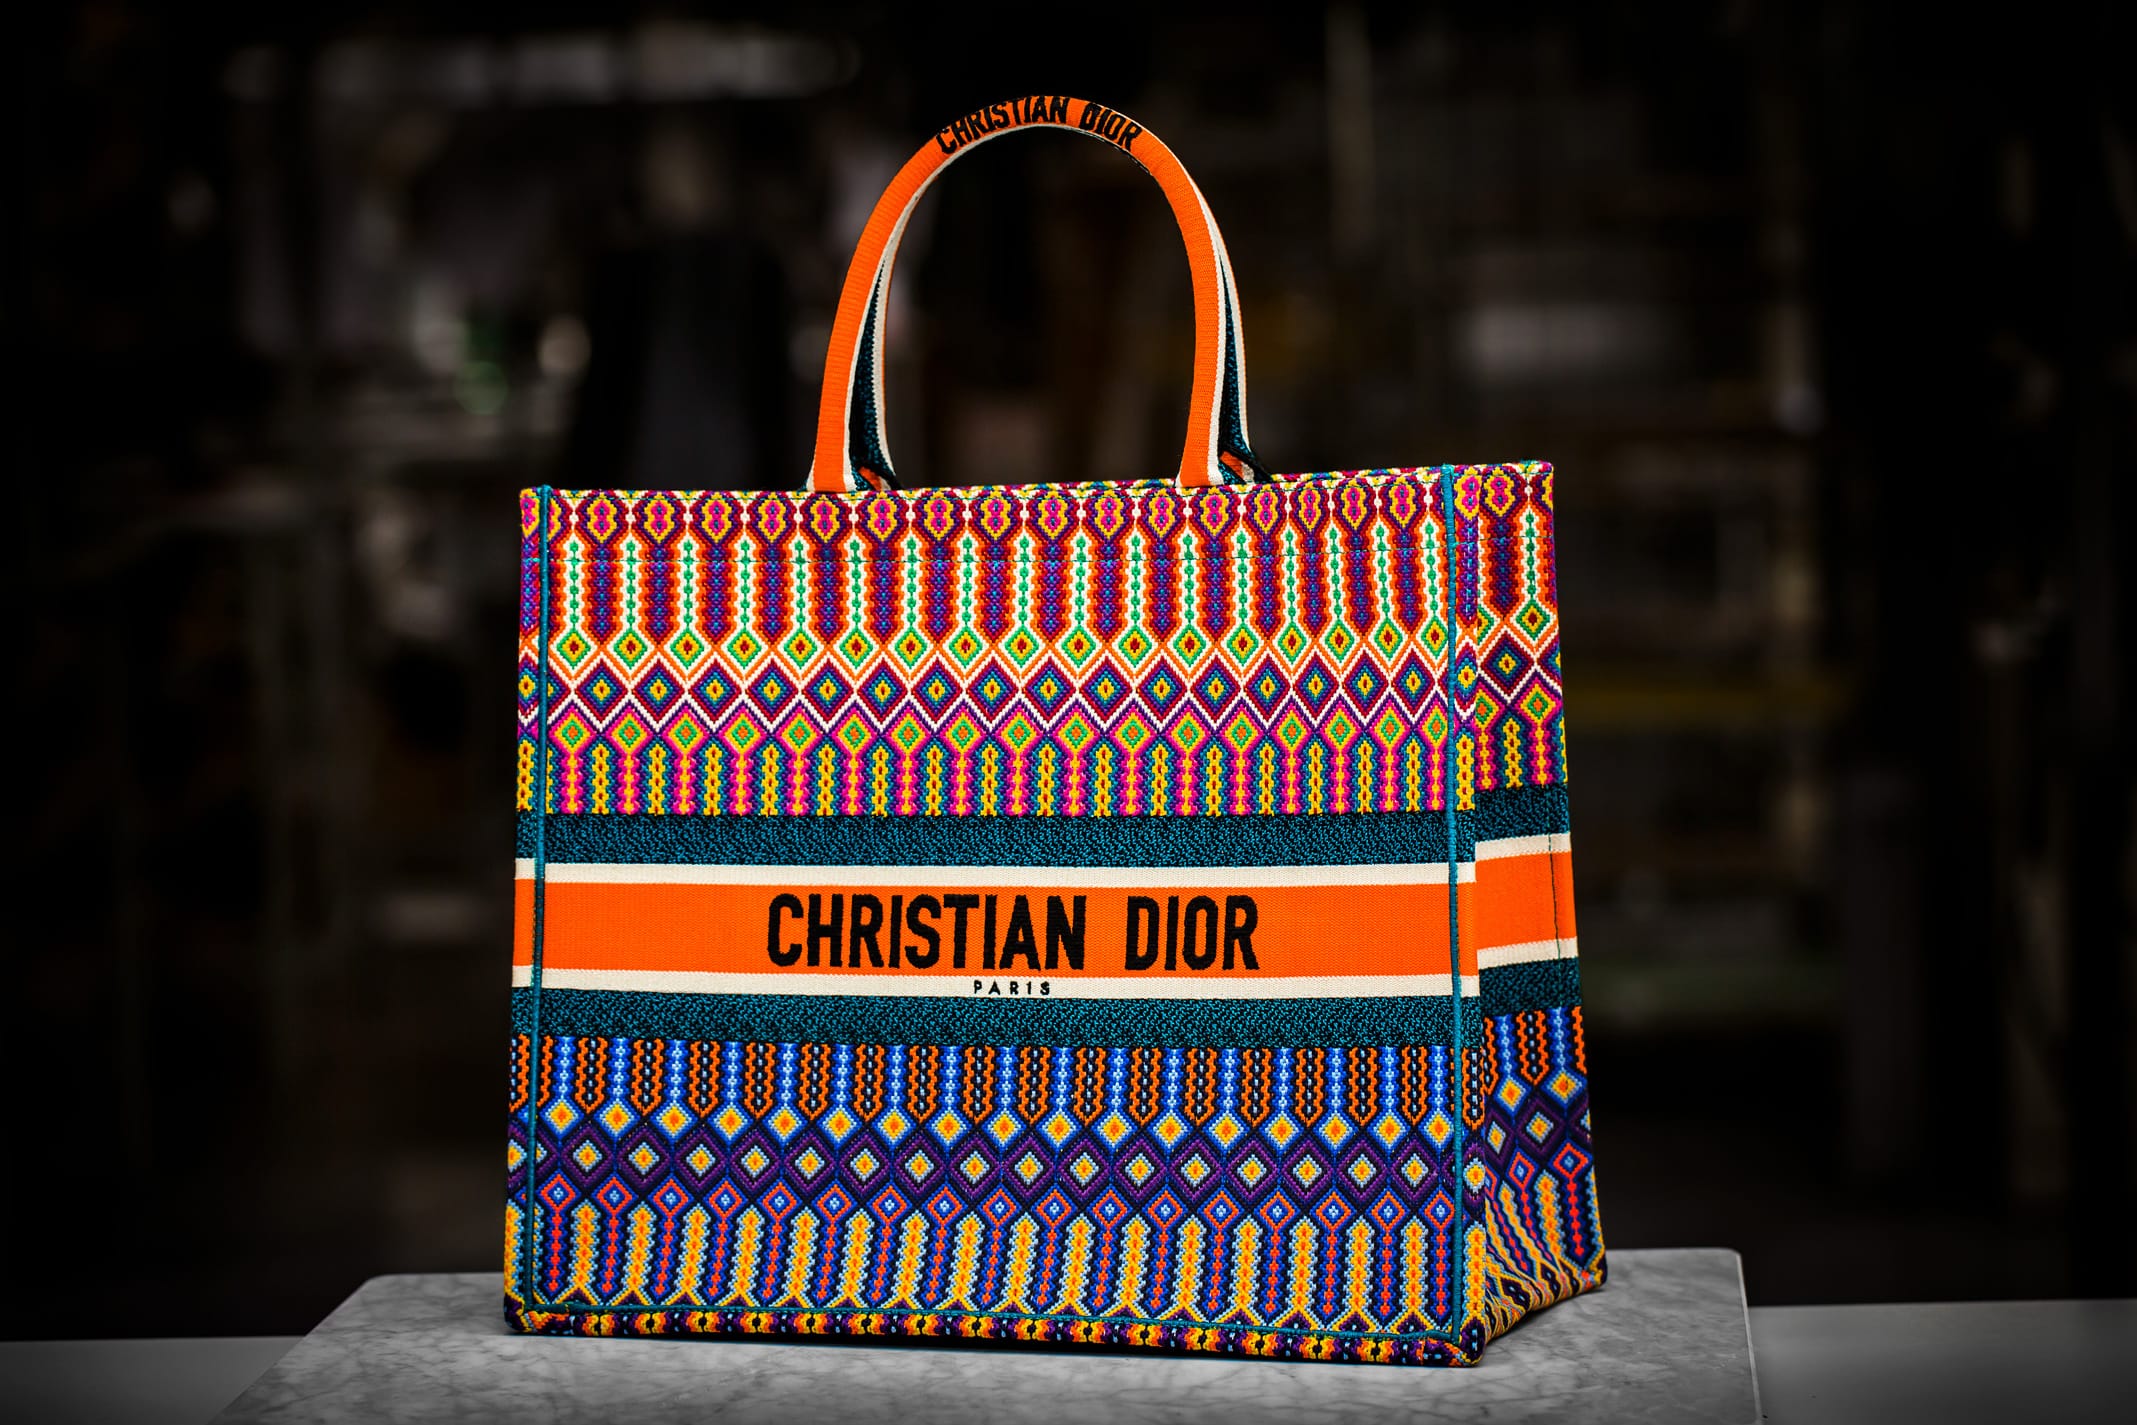 christian dior tote bag price singapore